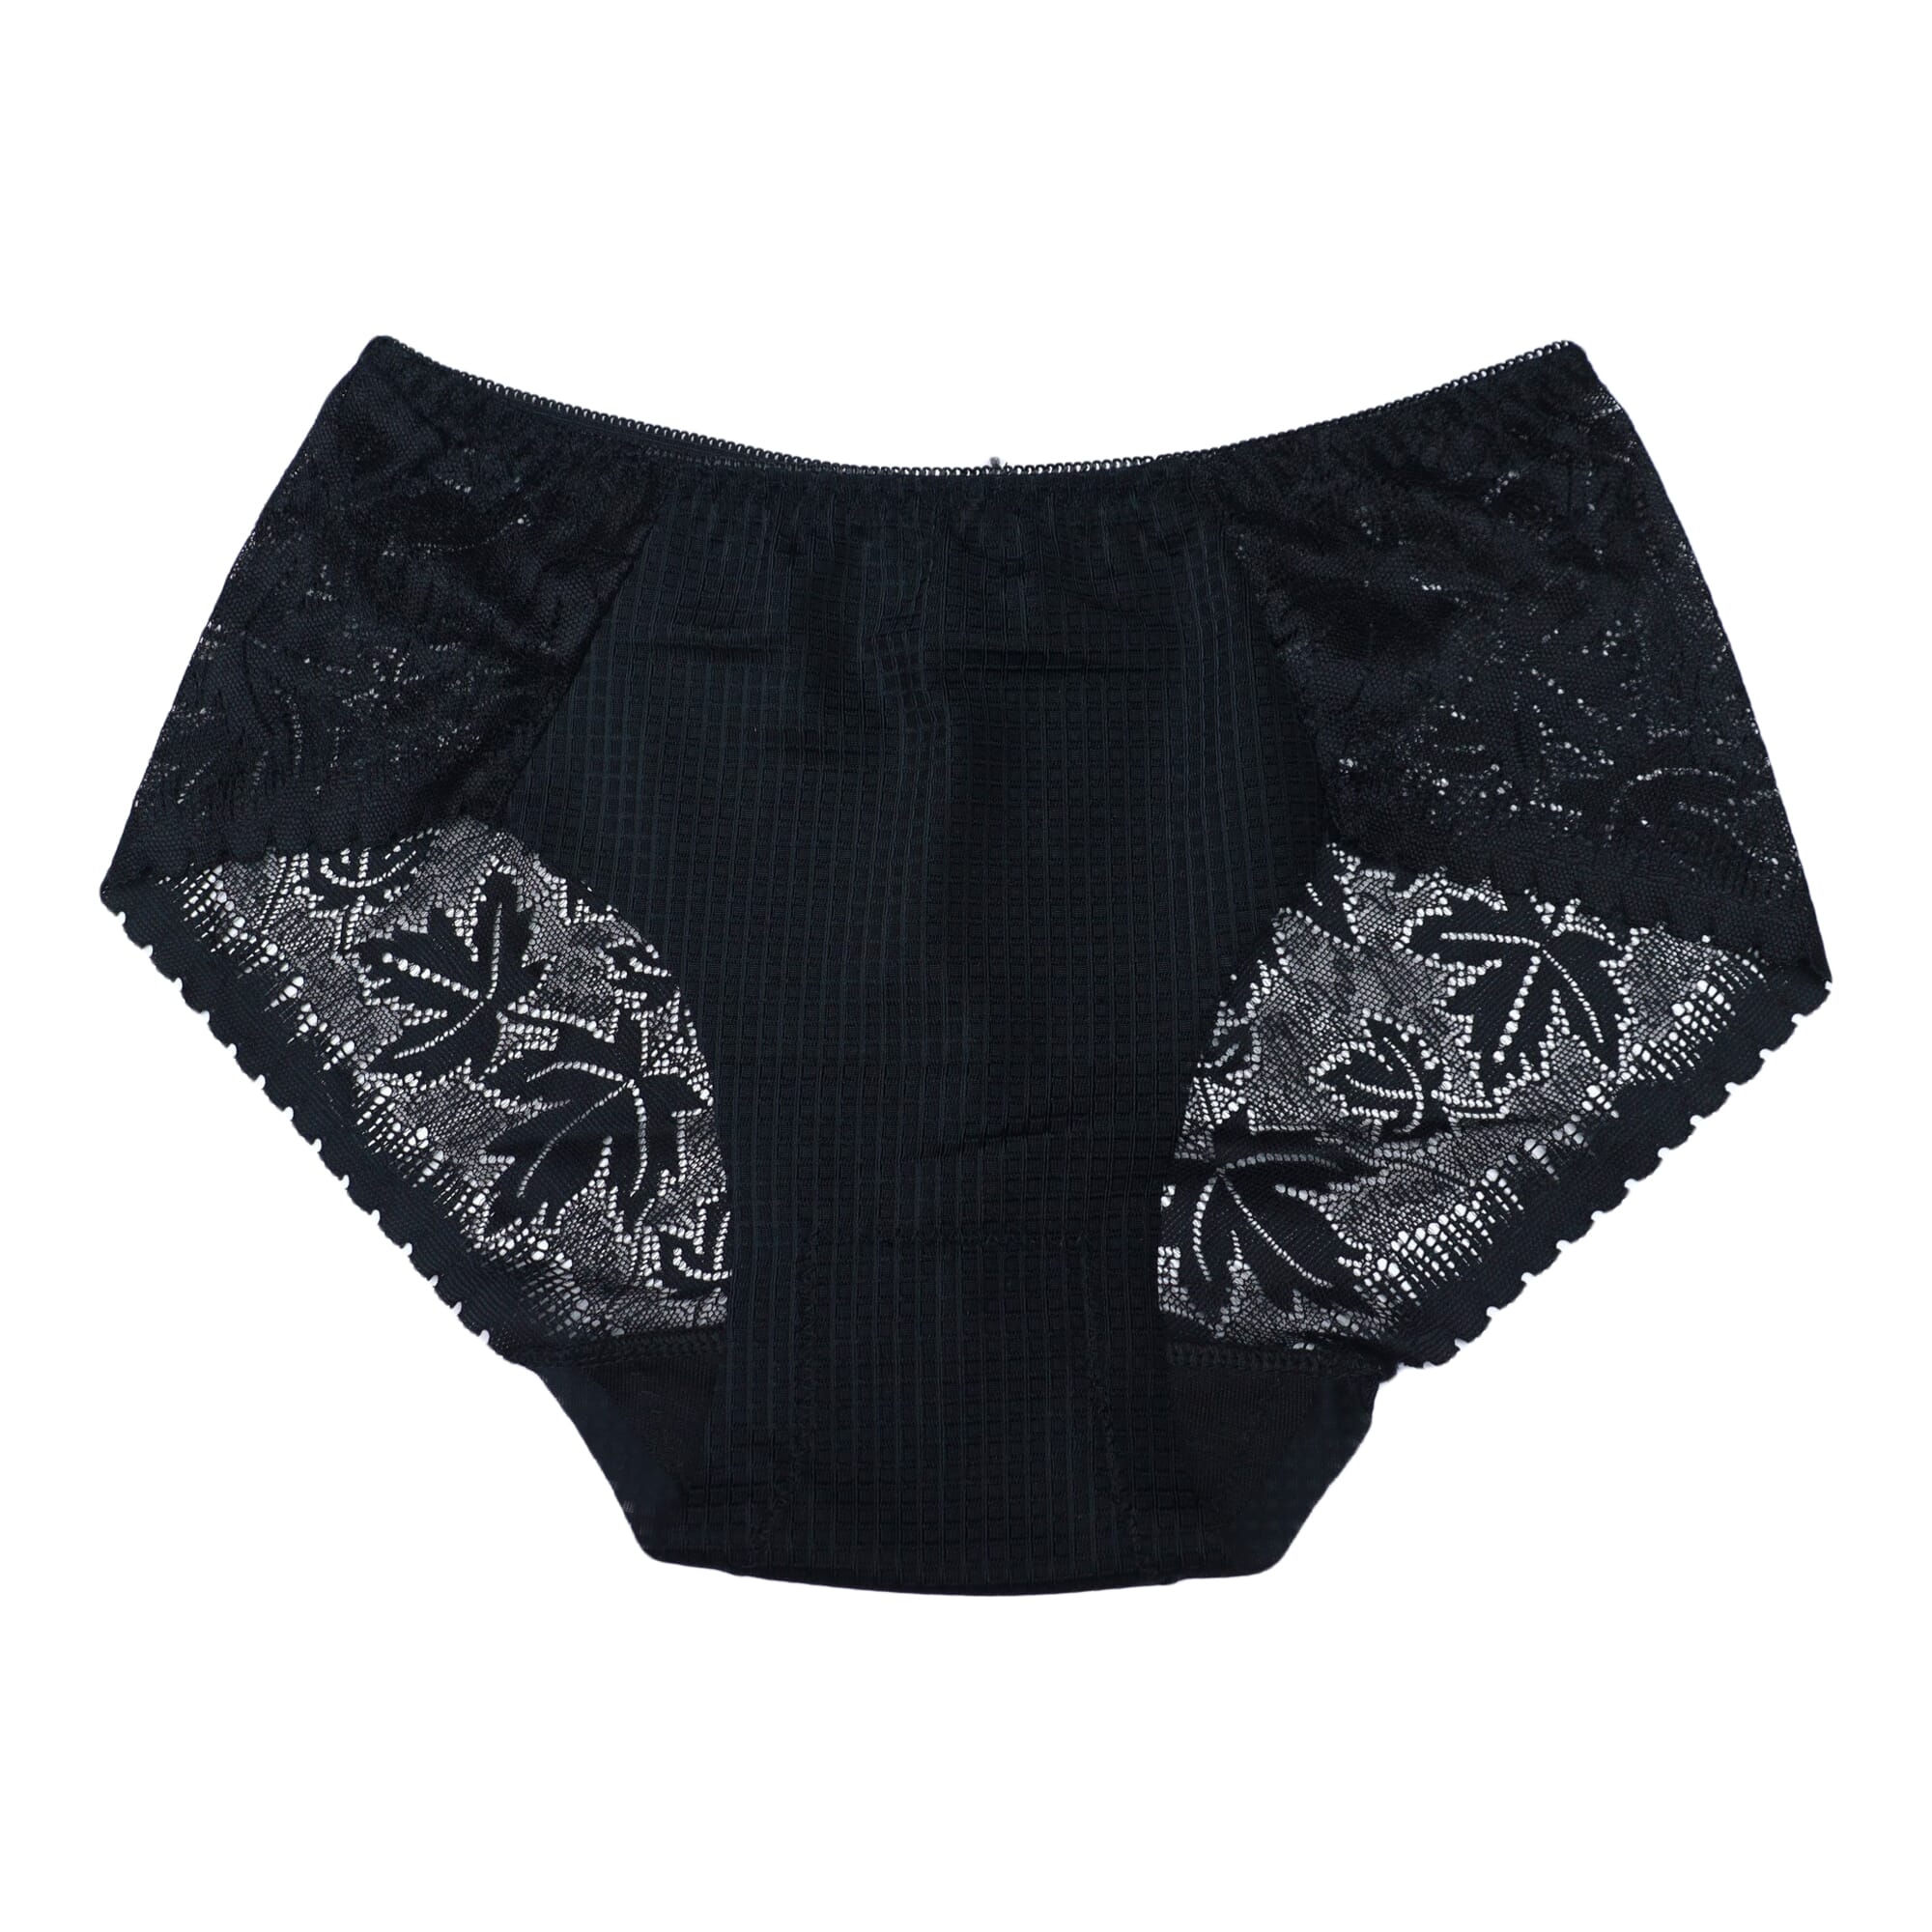 Black Color Soft Cotton Side Lacy Underwear For Women